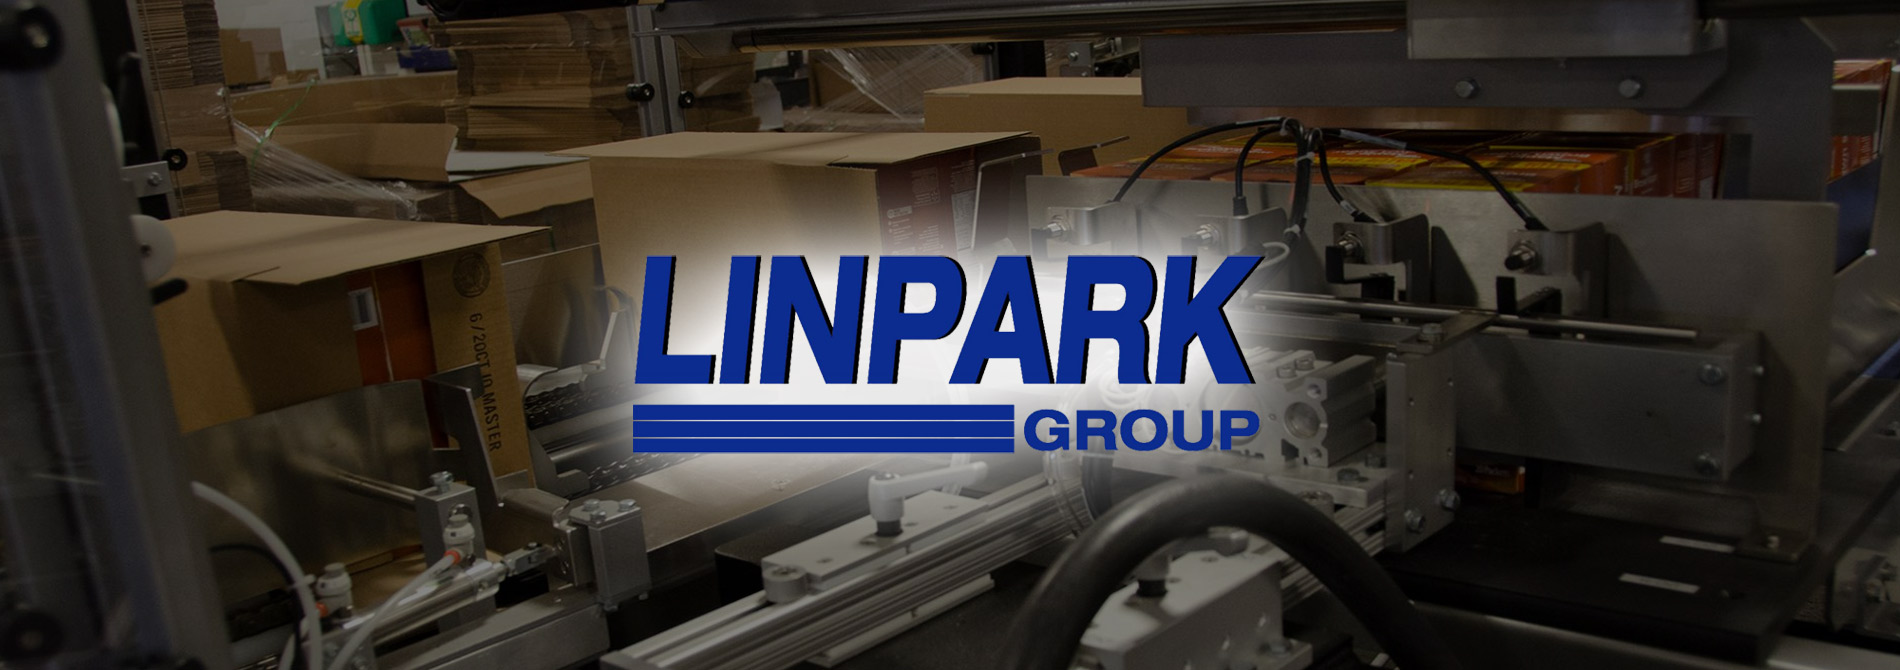 Linpark Group